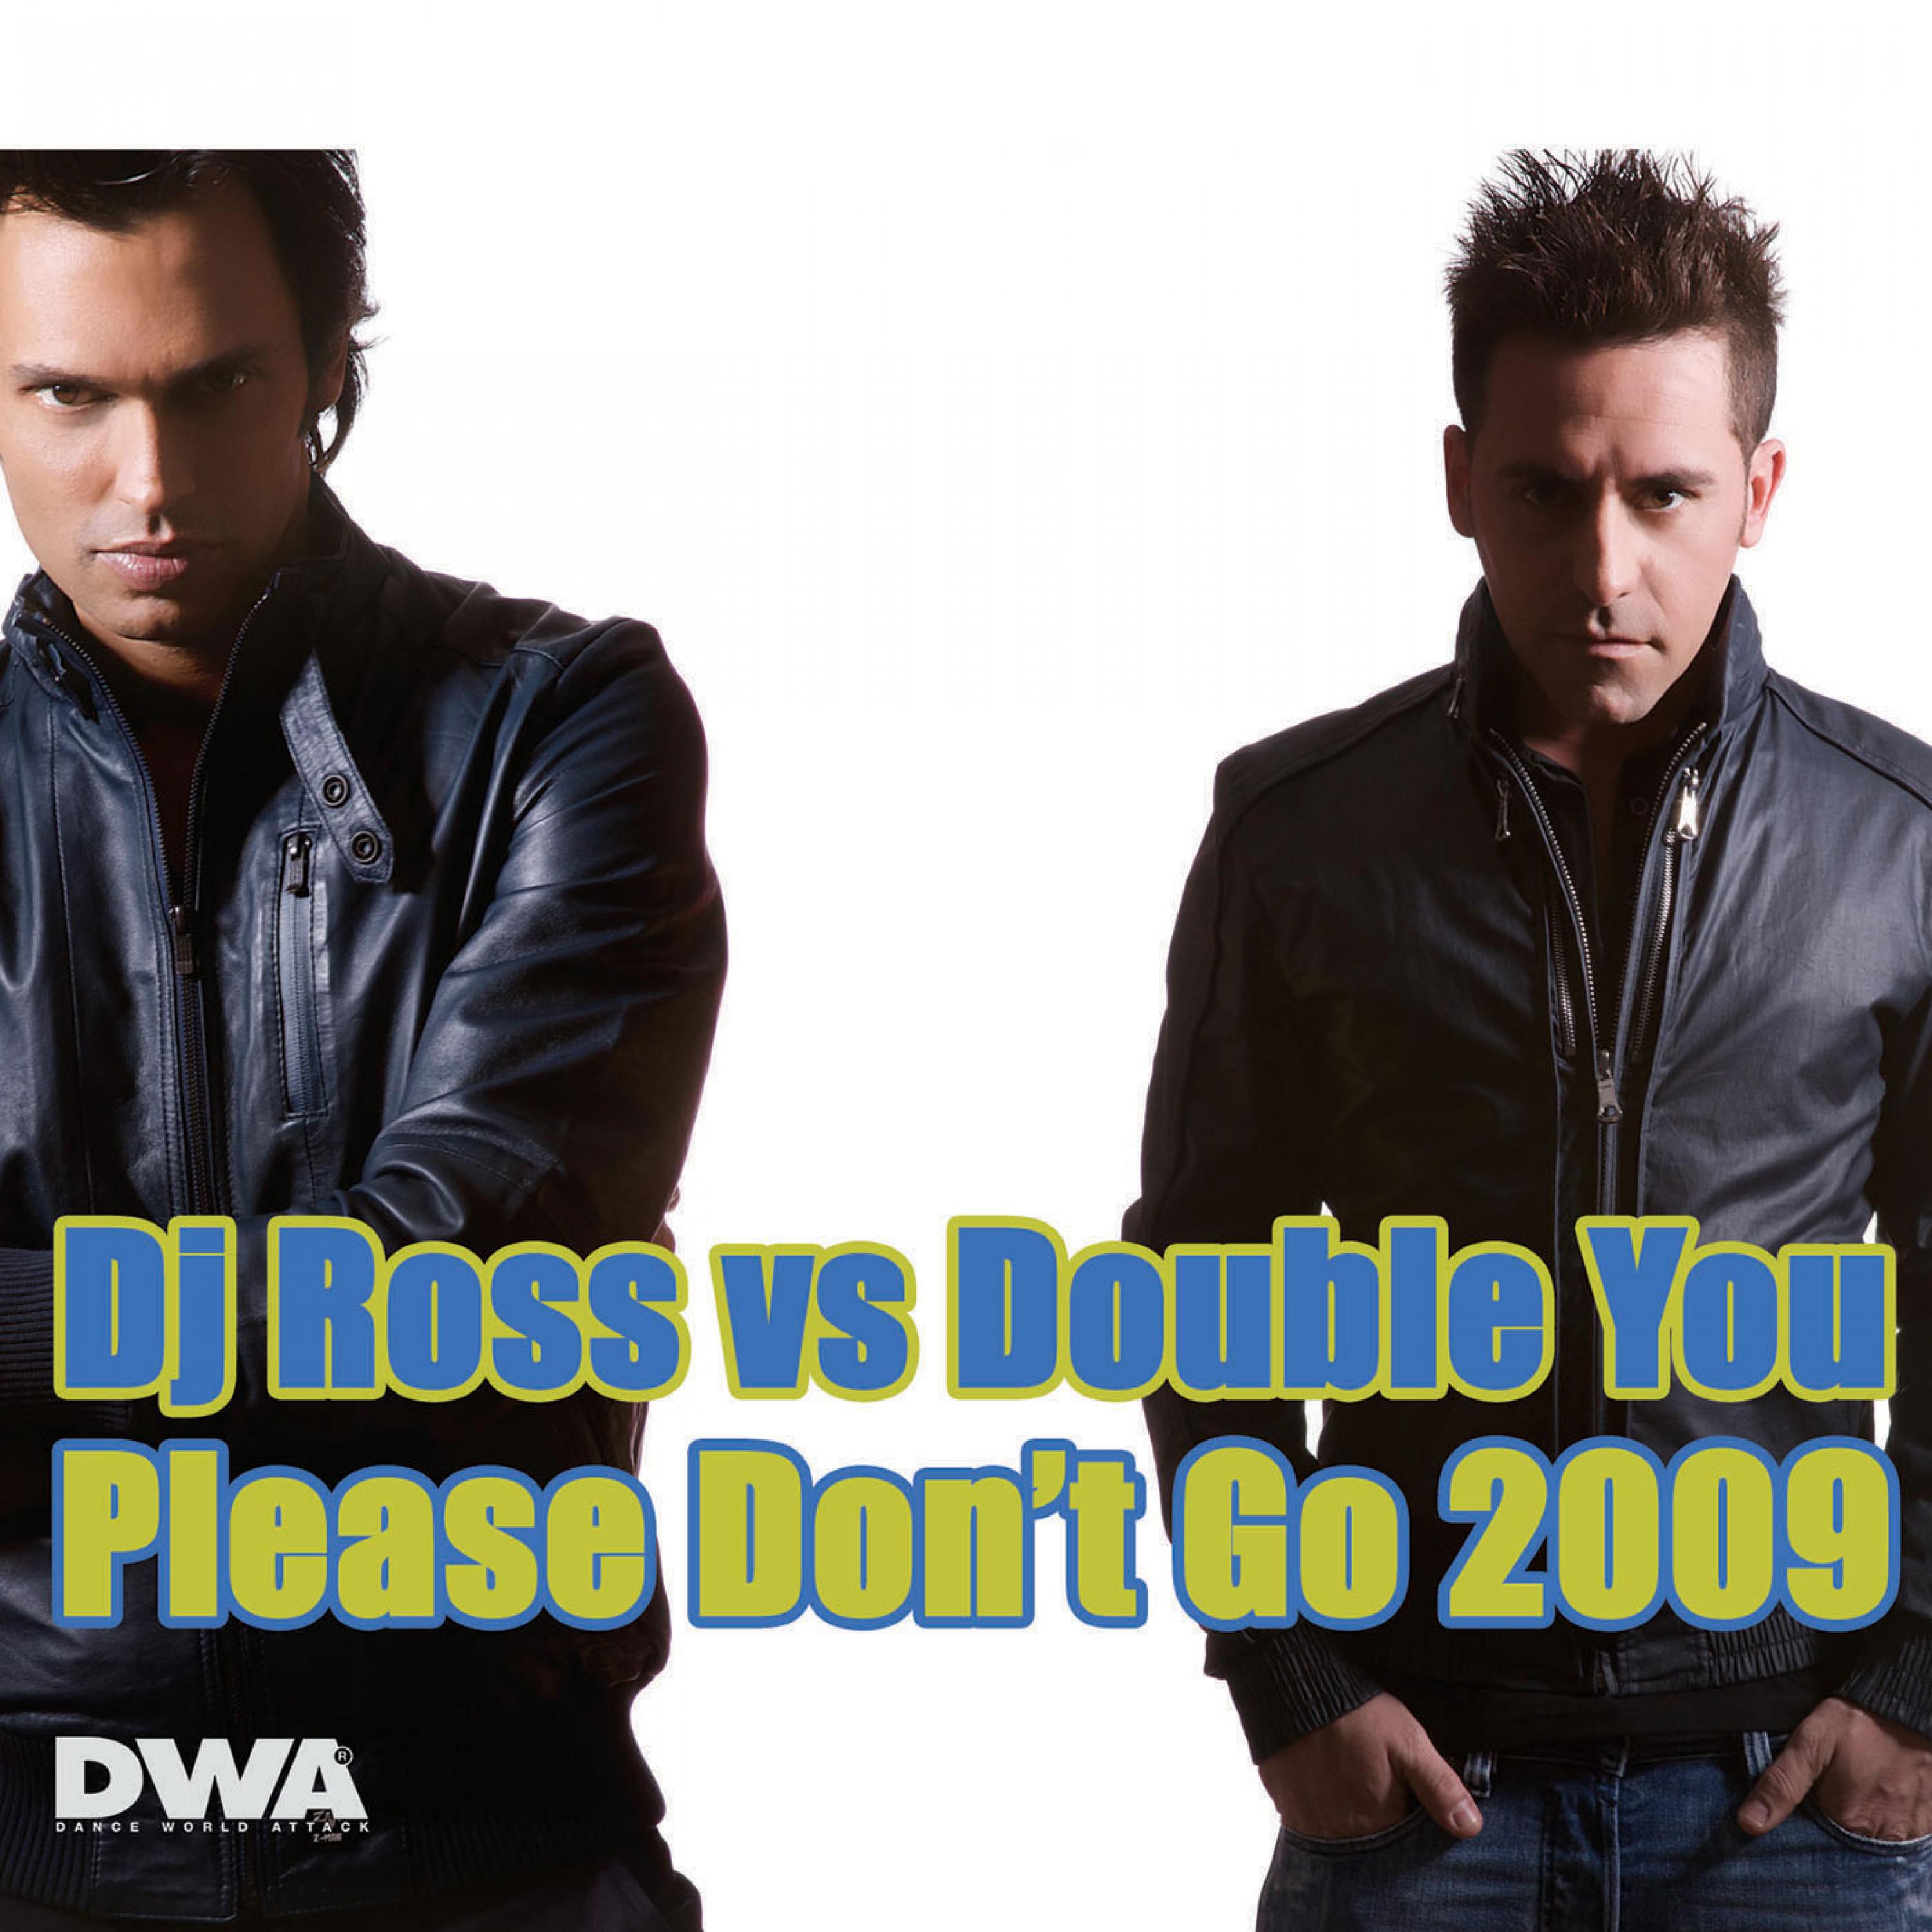 Please Don't Go (Popdance Radio)